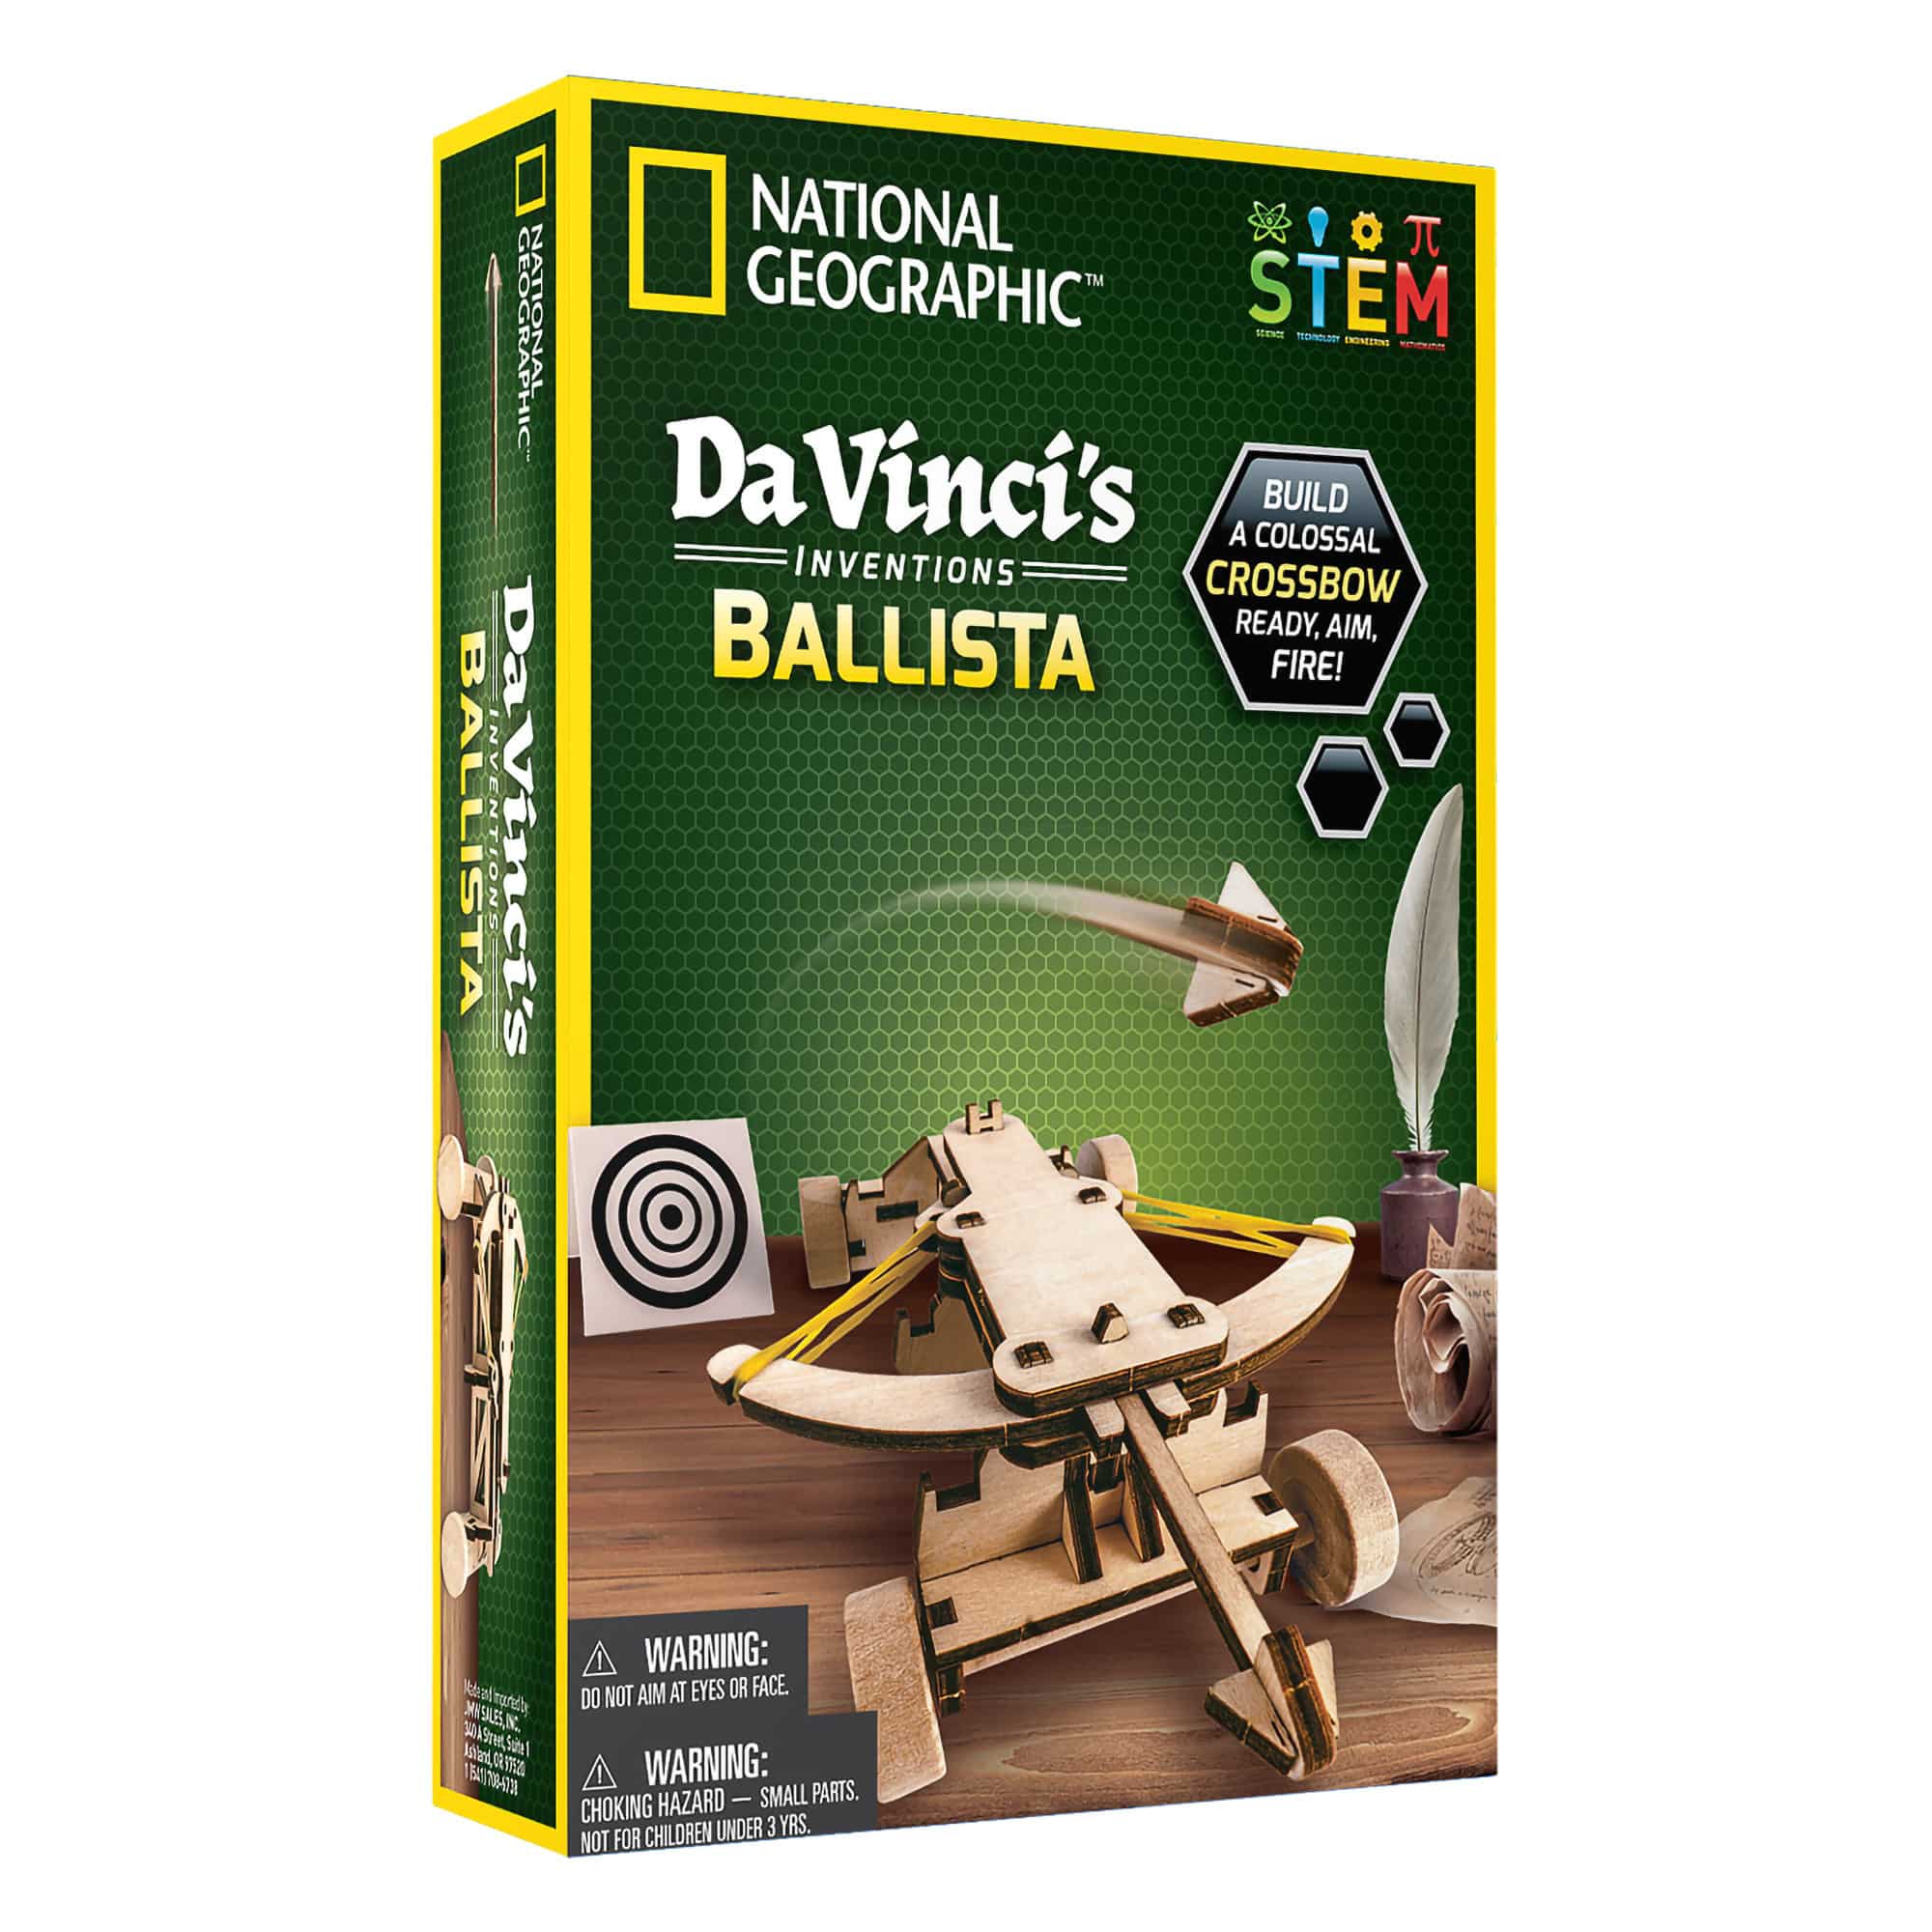 National Geographic - Da Vinci's Inventions - Ballista